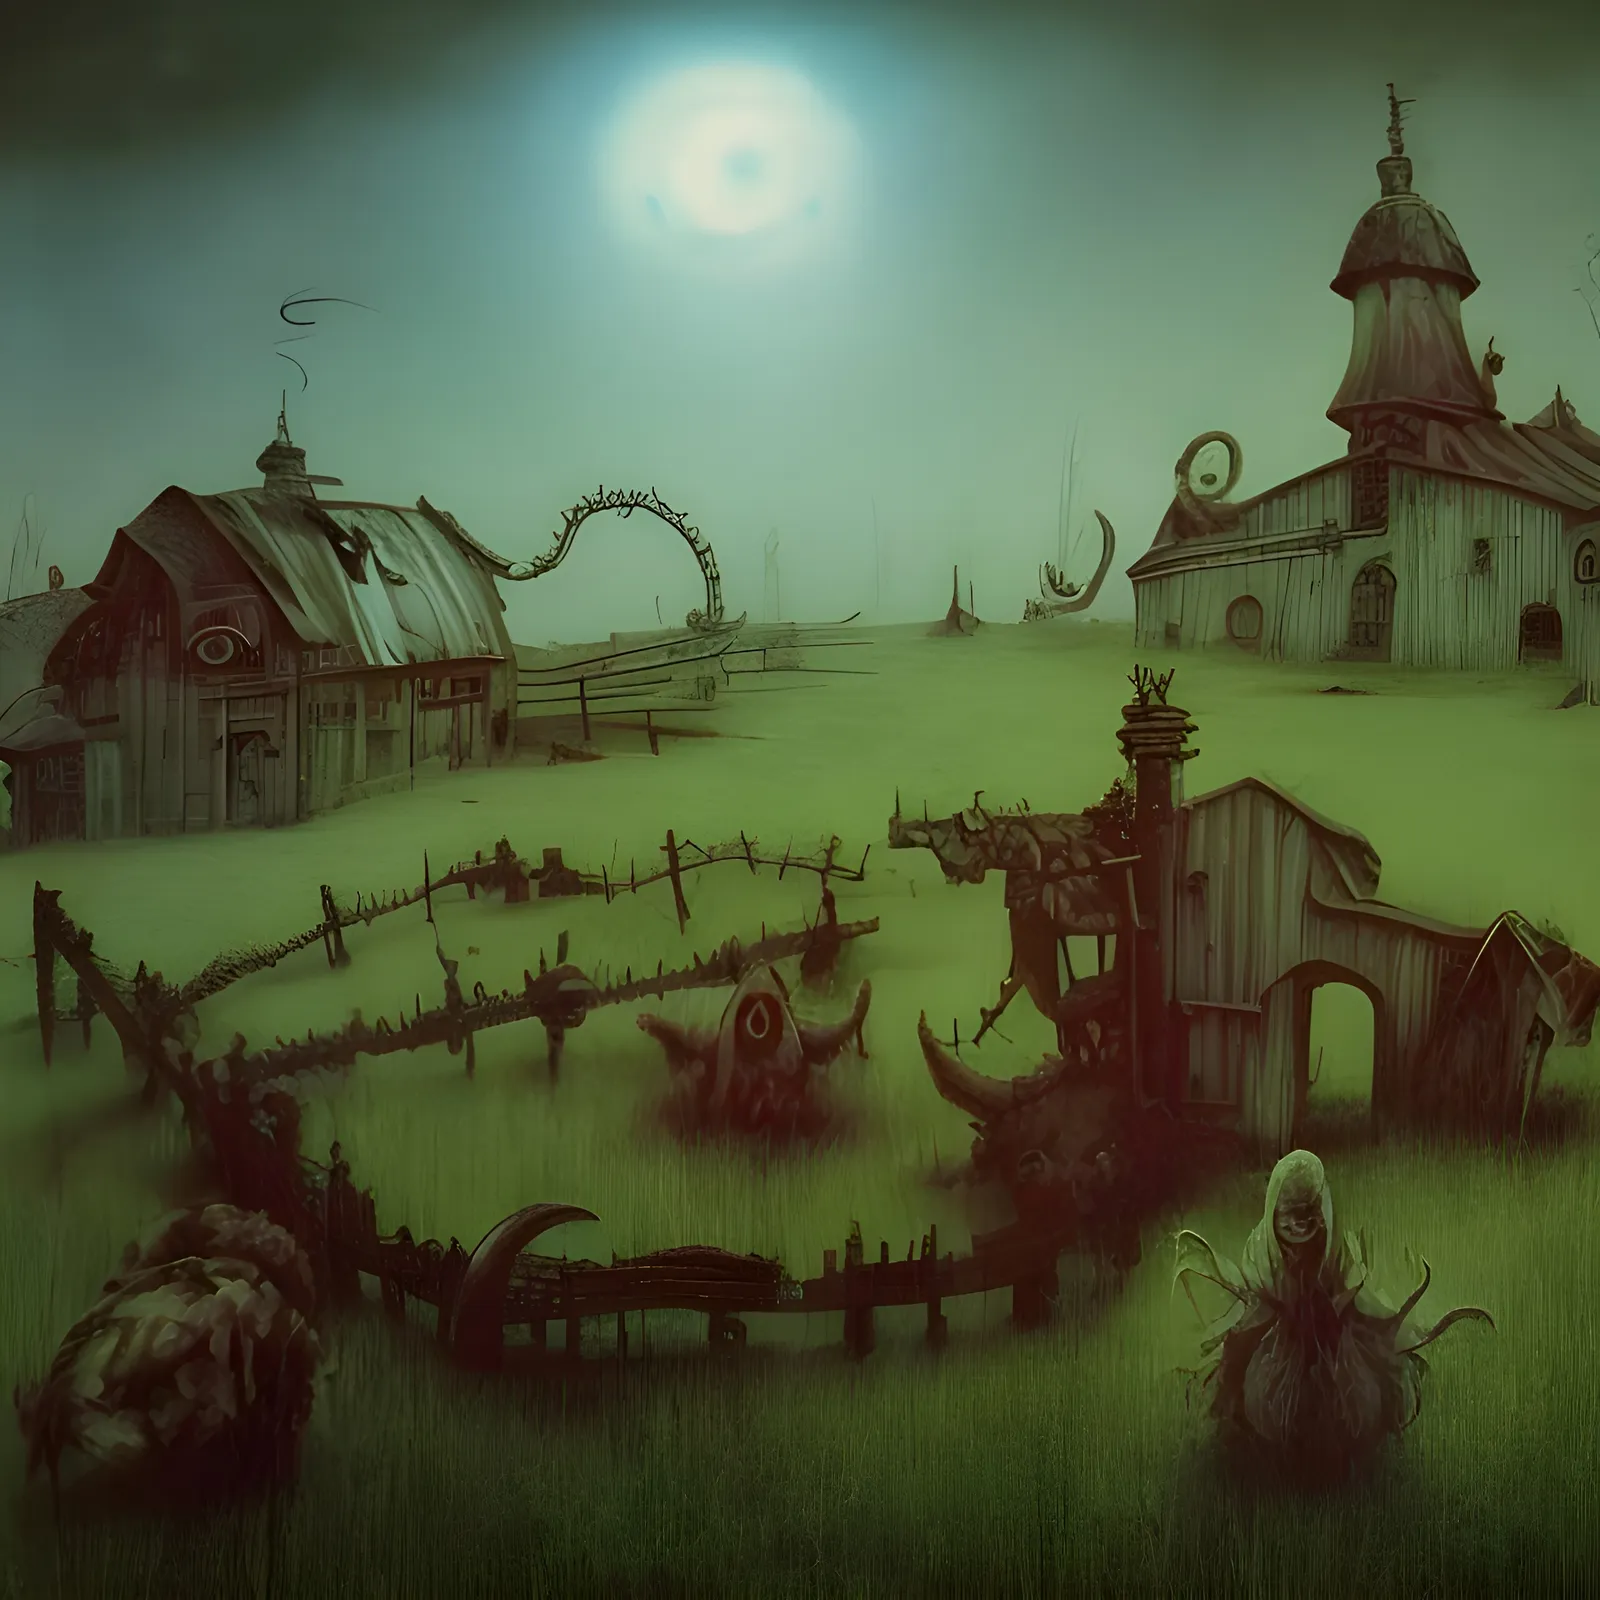 Nightmare Farm